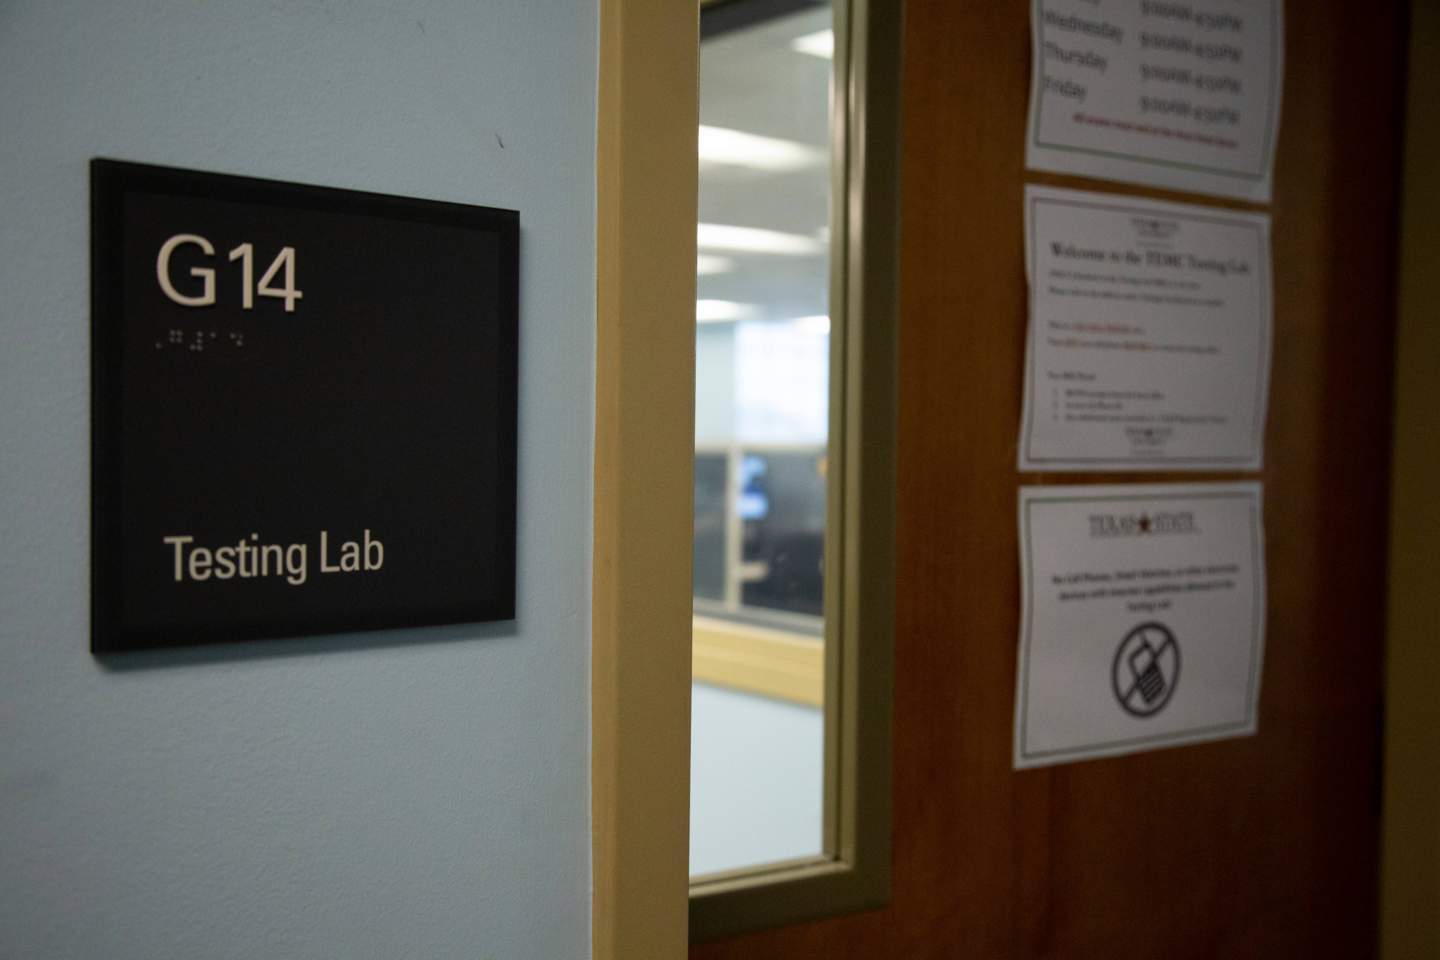 Testing Lab door sign at entrance